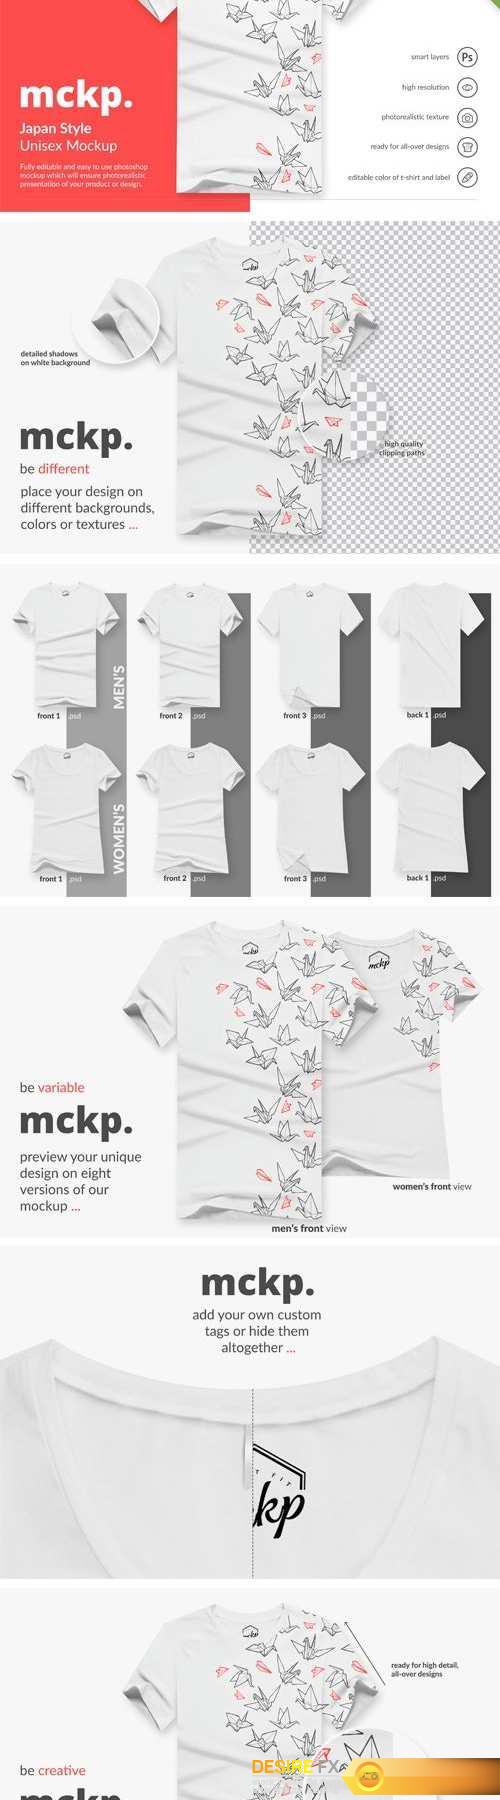 Japan Style by mckp - Tshirt Mockups - 1428977